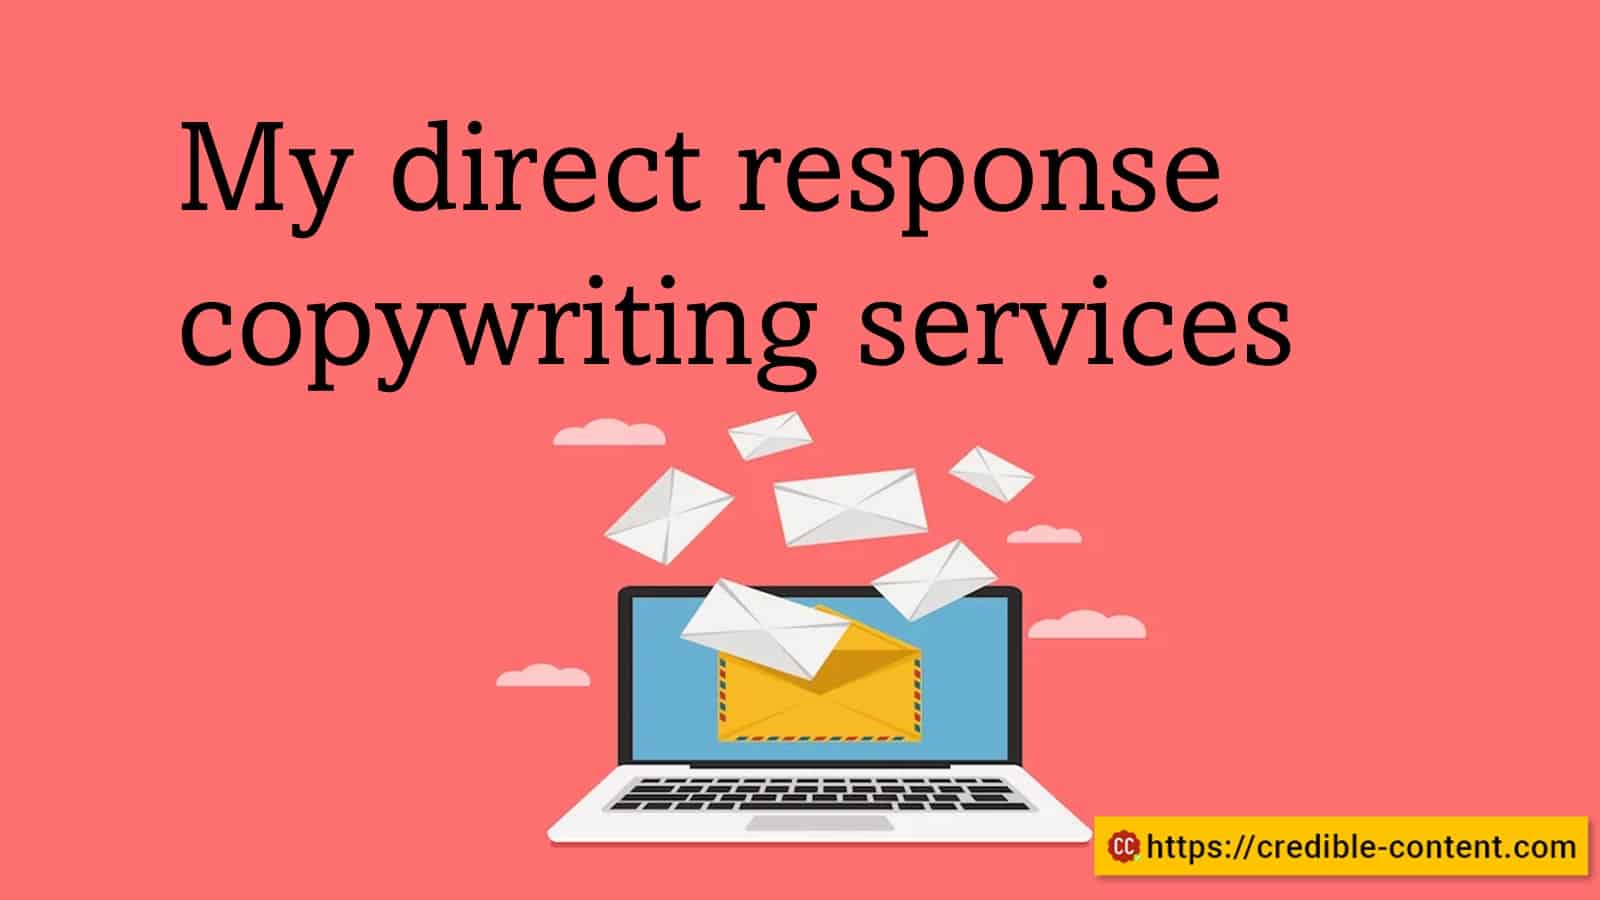 My direct response copywriting services